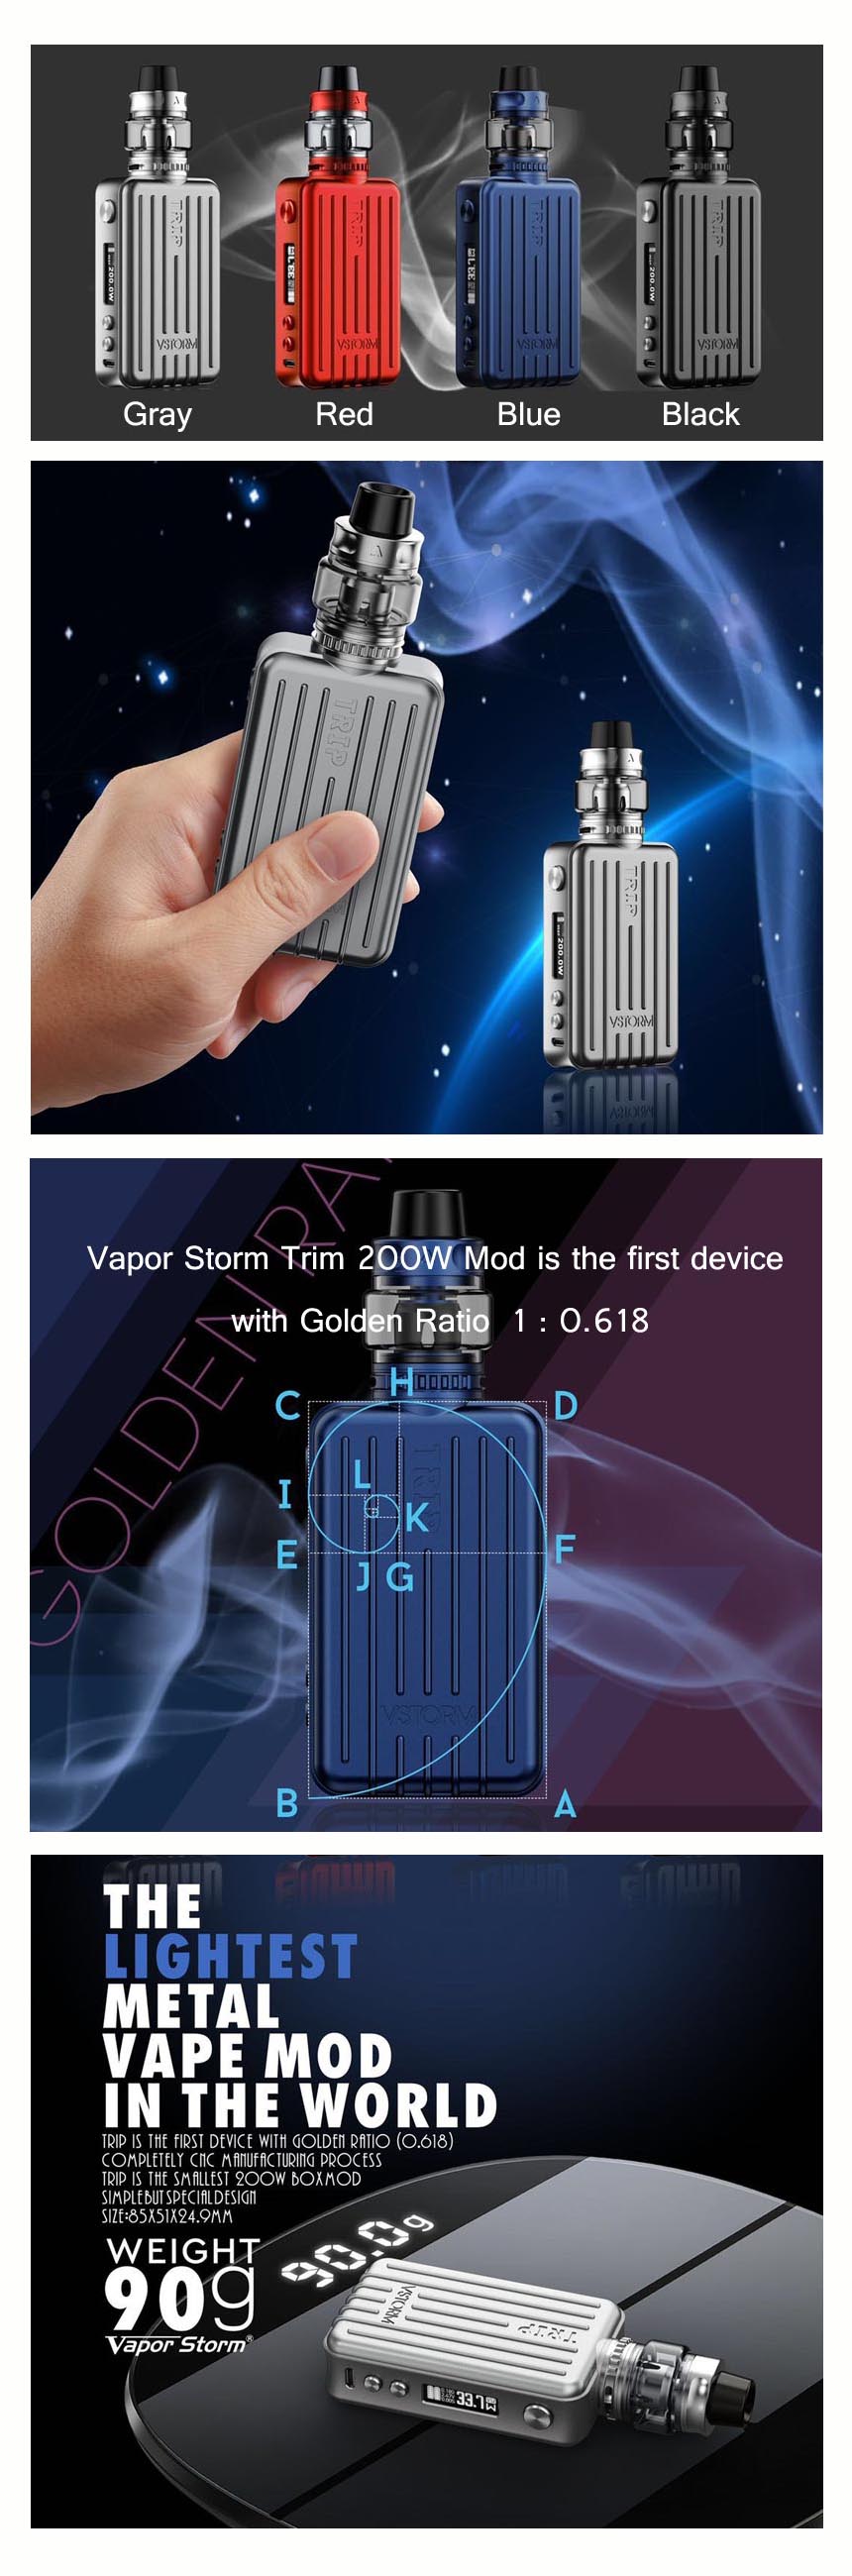 vapor storm trip kit